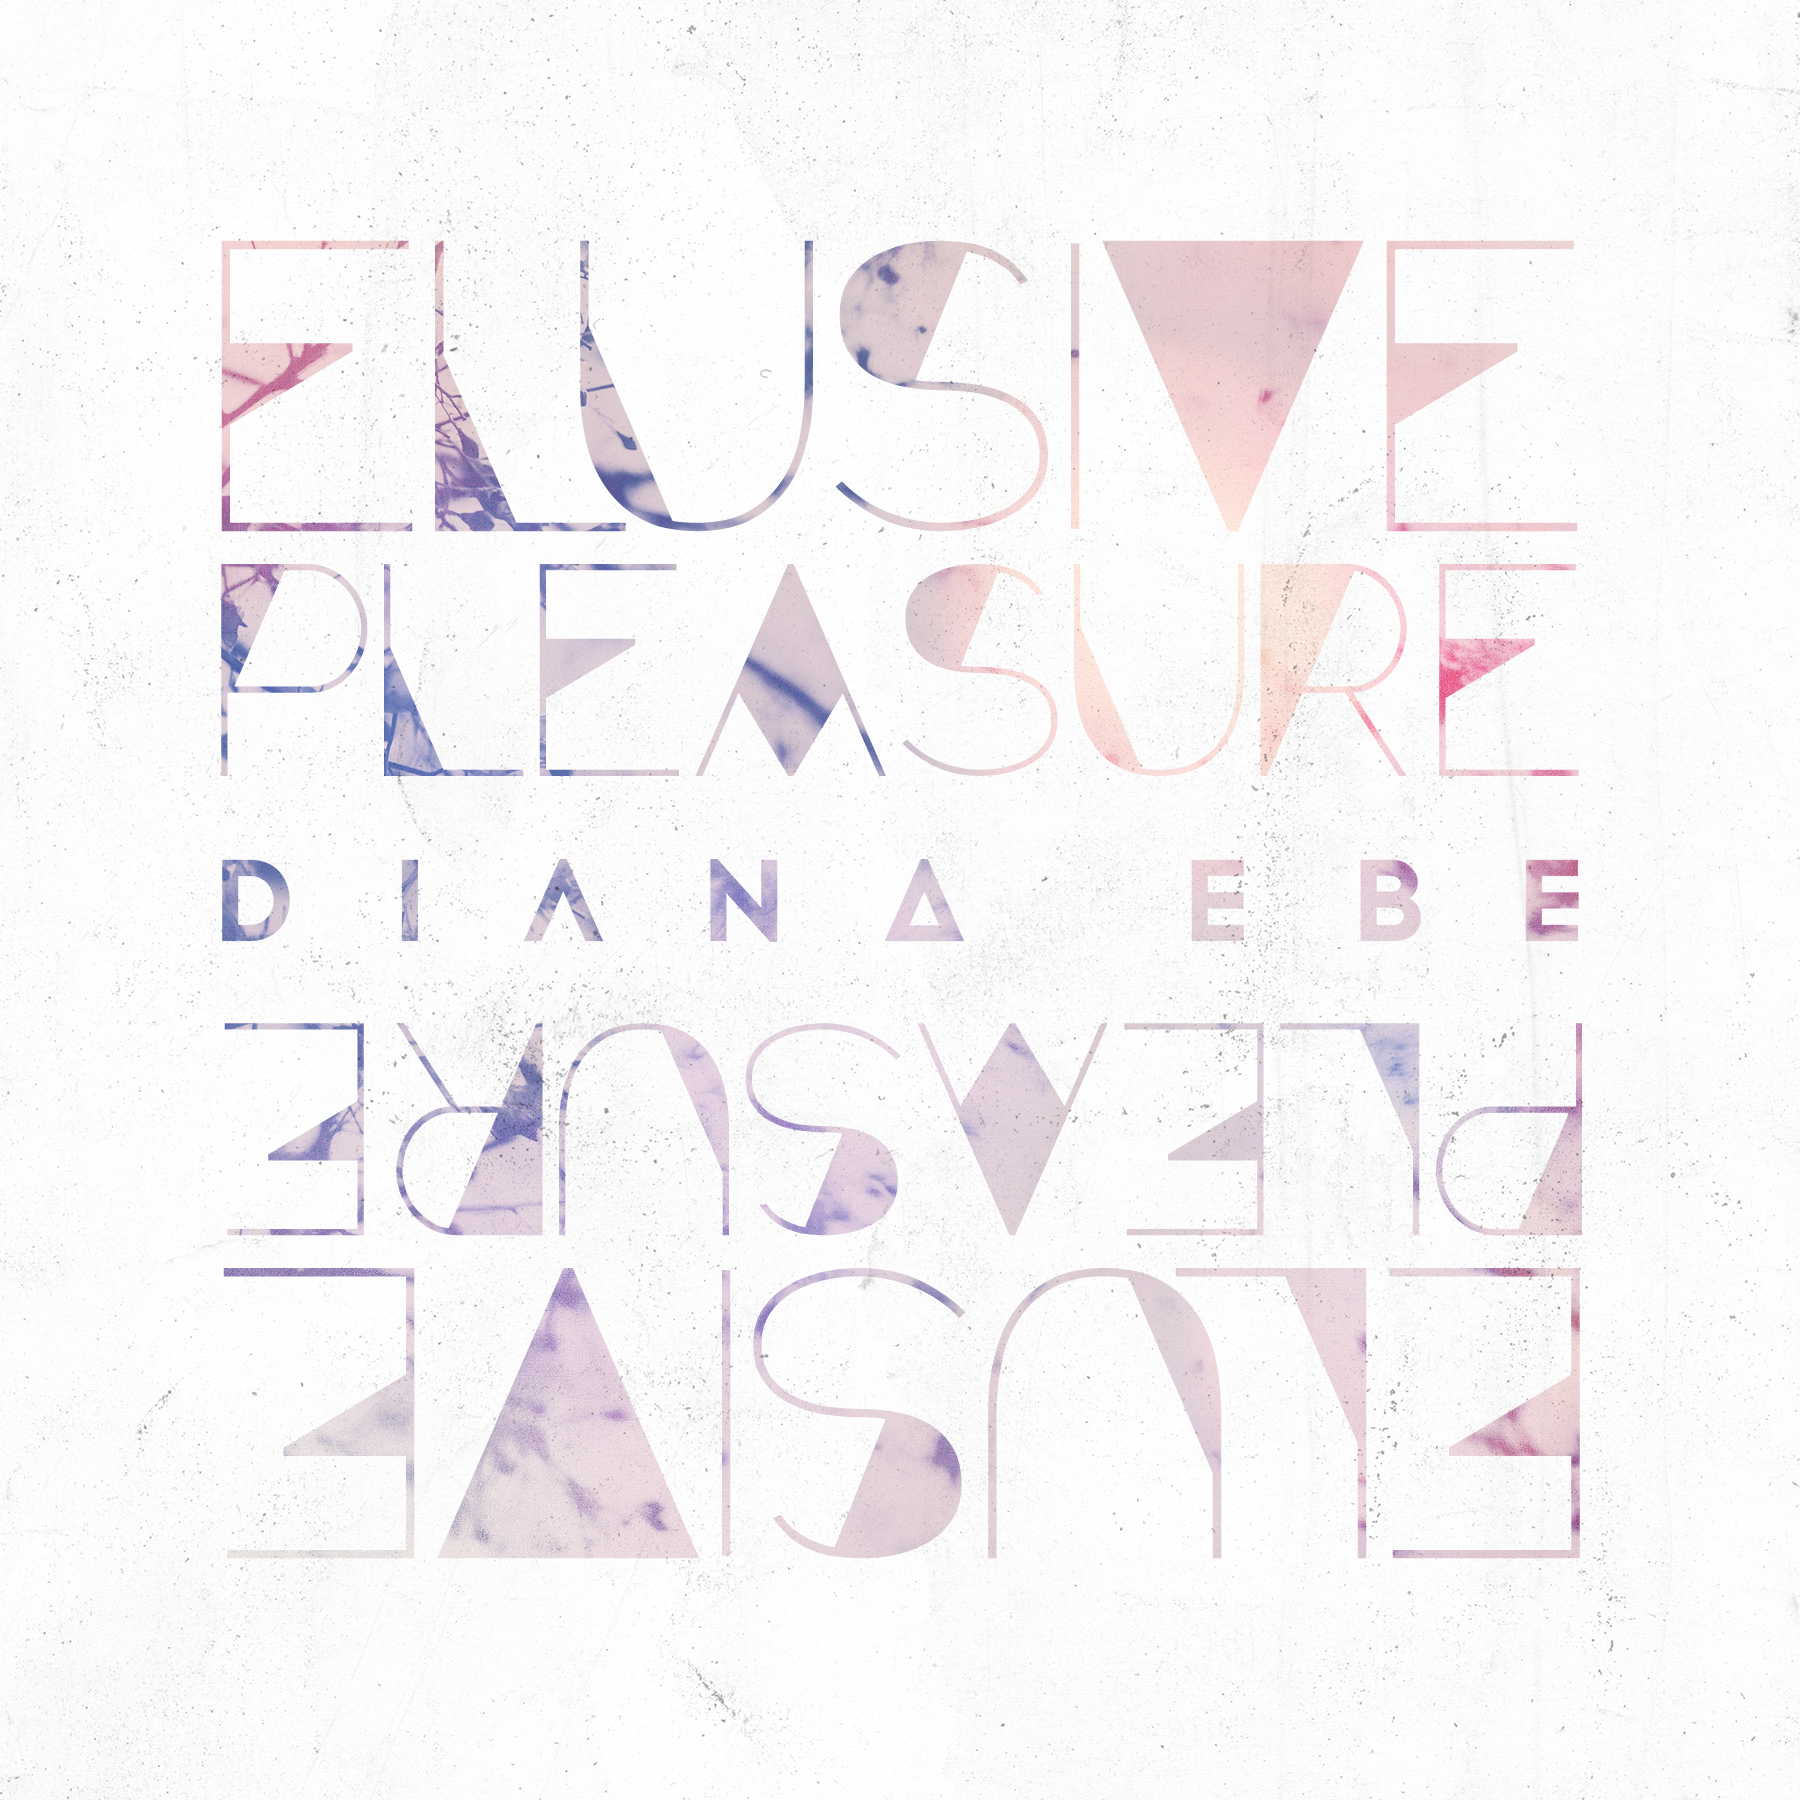 Diana Ebe - "Elusive Pleasure"